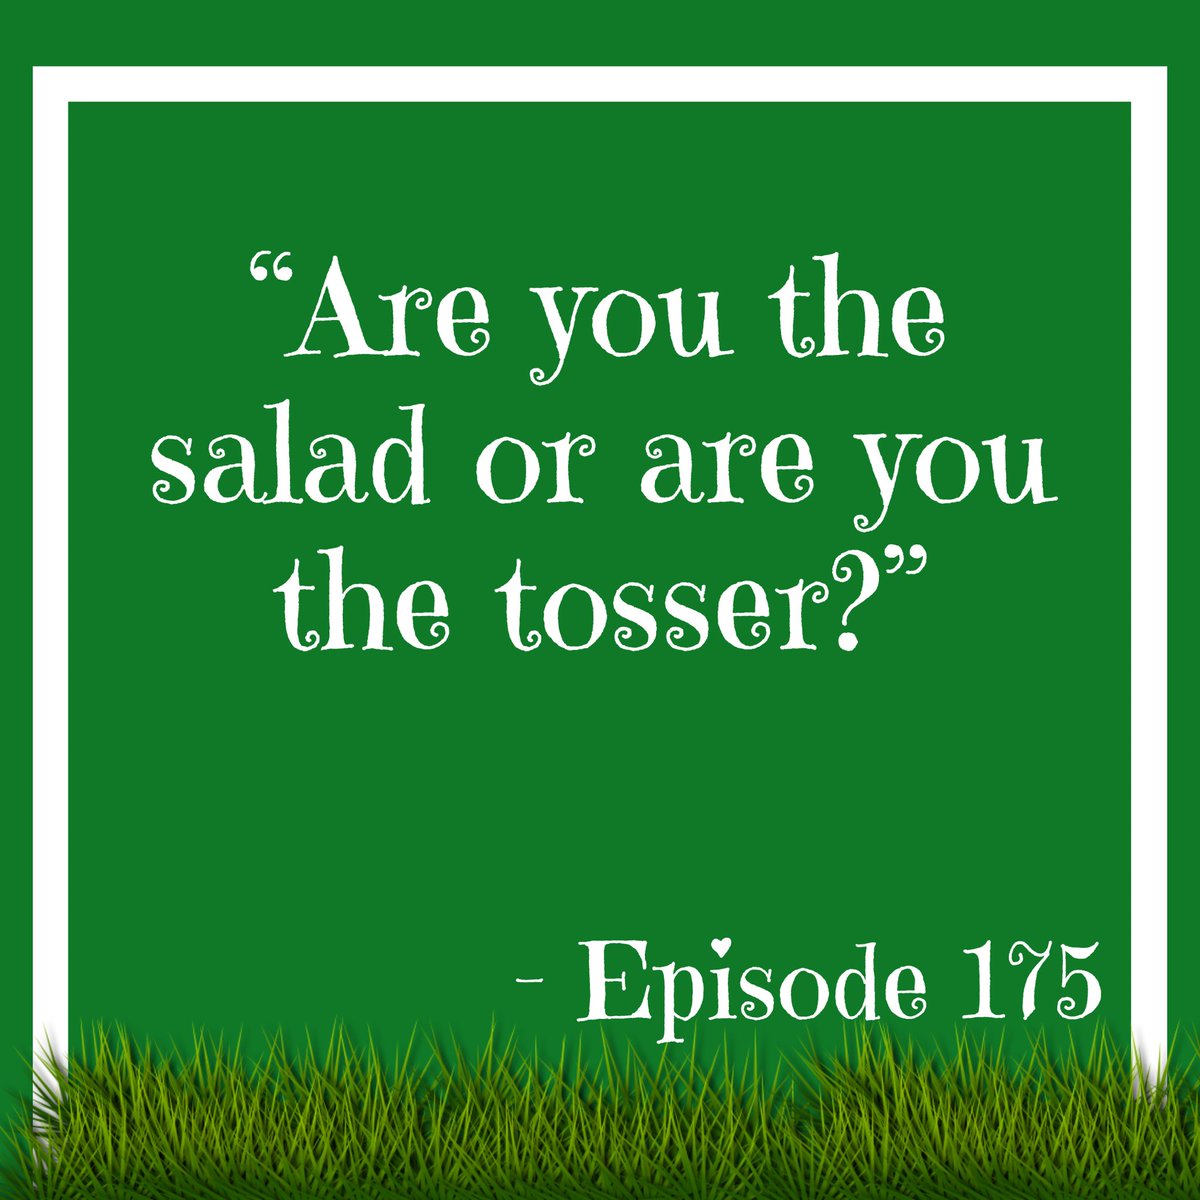 That’s What She Said

🥗🥗🥗🥗🥗🥗🥗
#thegreenergrasspodcast #greenergrasspodcast #podcast #wouldyourather  #prosandcons #youhavetopickone #offthetonguepodcastnetwork #patreon #follow #subscribe #fruitorveg #fruit #veg #tosser #tossedsalad #salad #thatswhatshesaid #twss